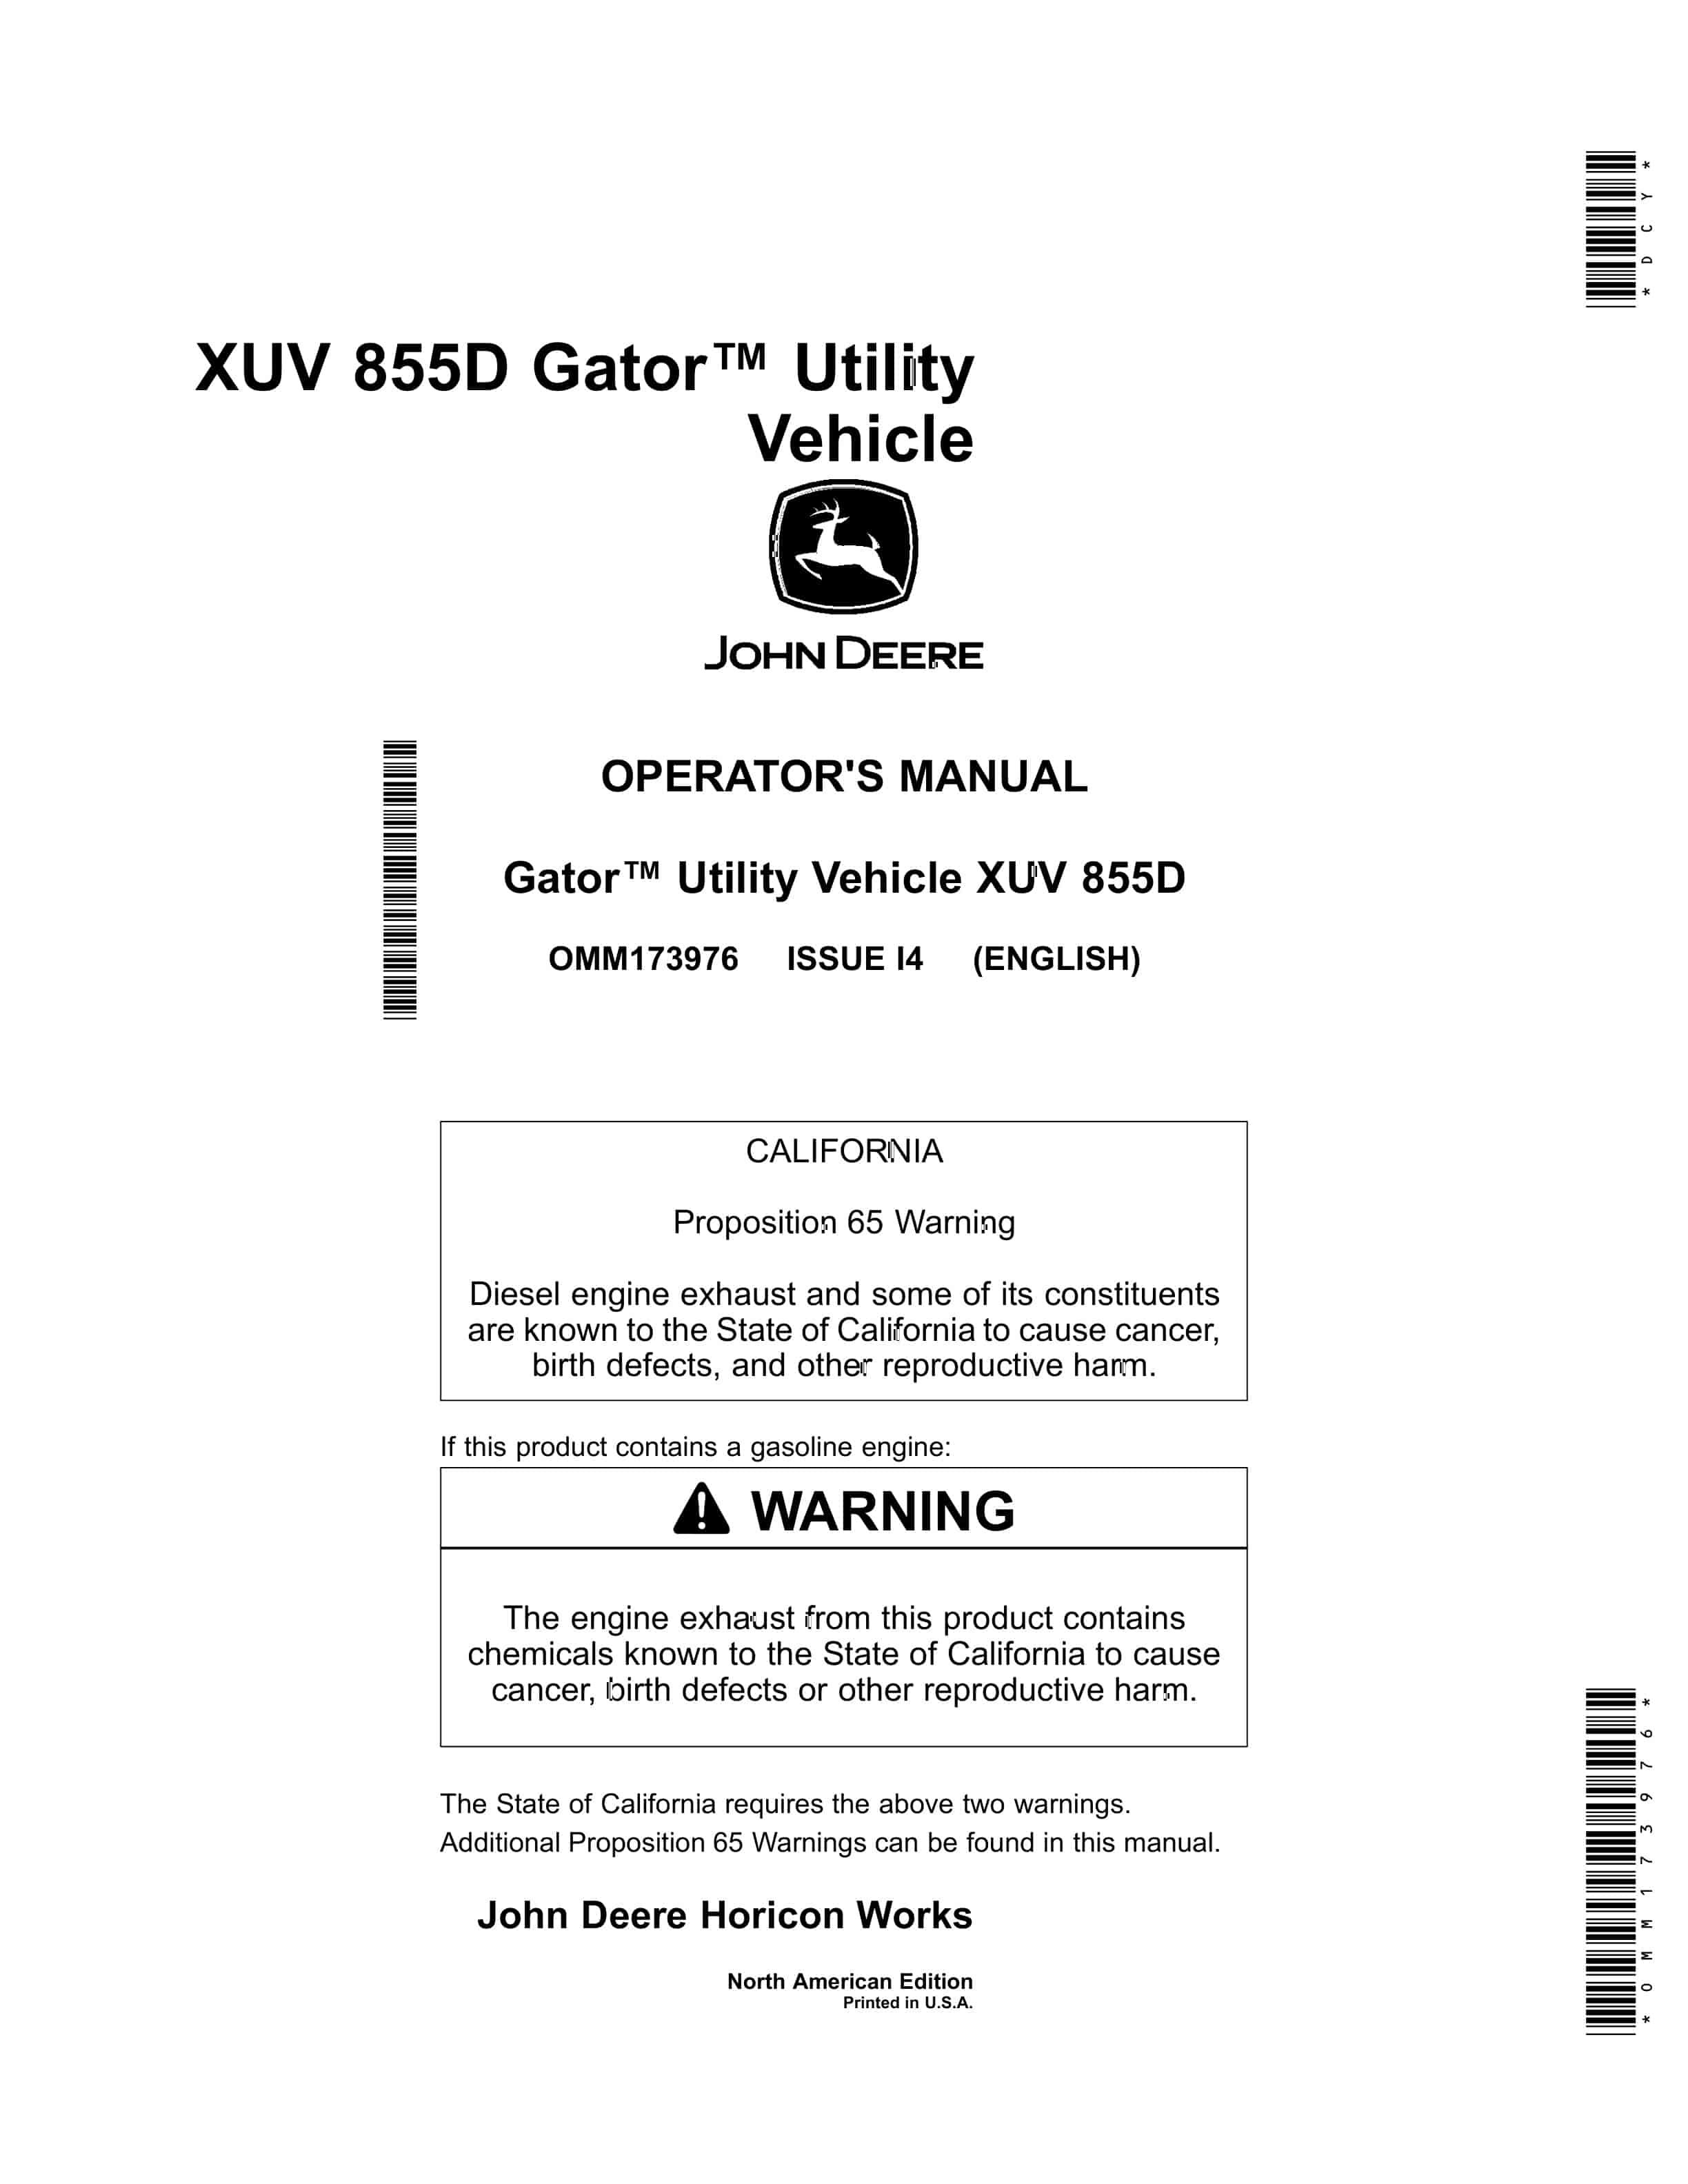 John Deere XUV 855D Gator Utility Vehicles Operator Manual OMM173976 1